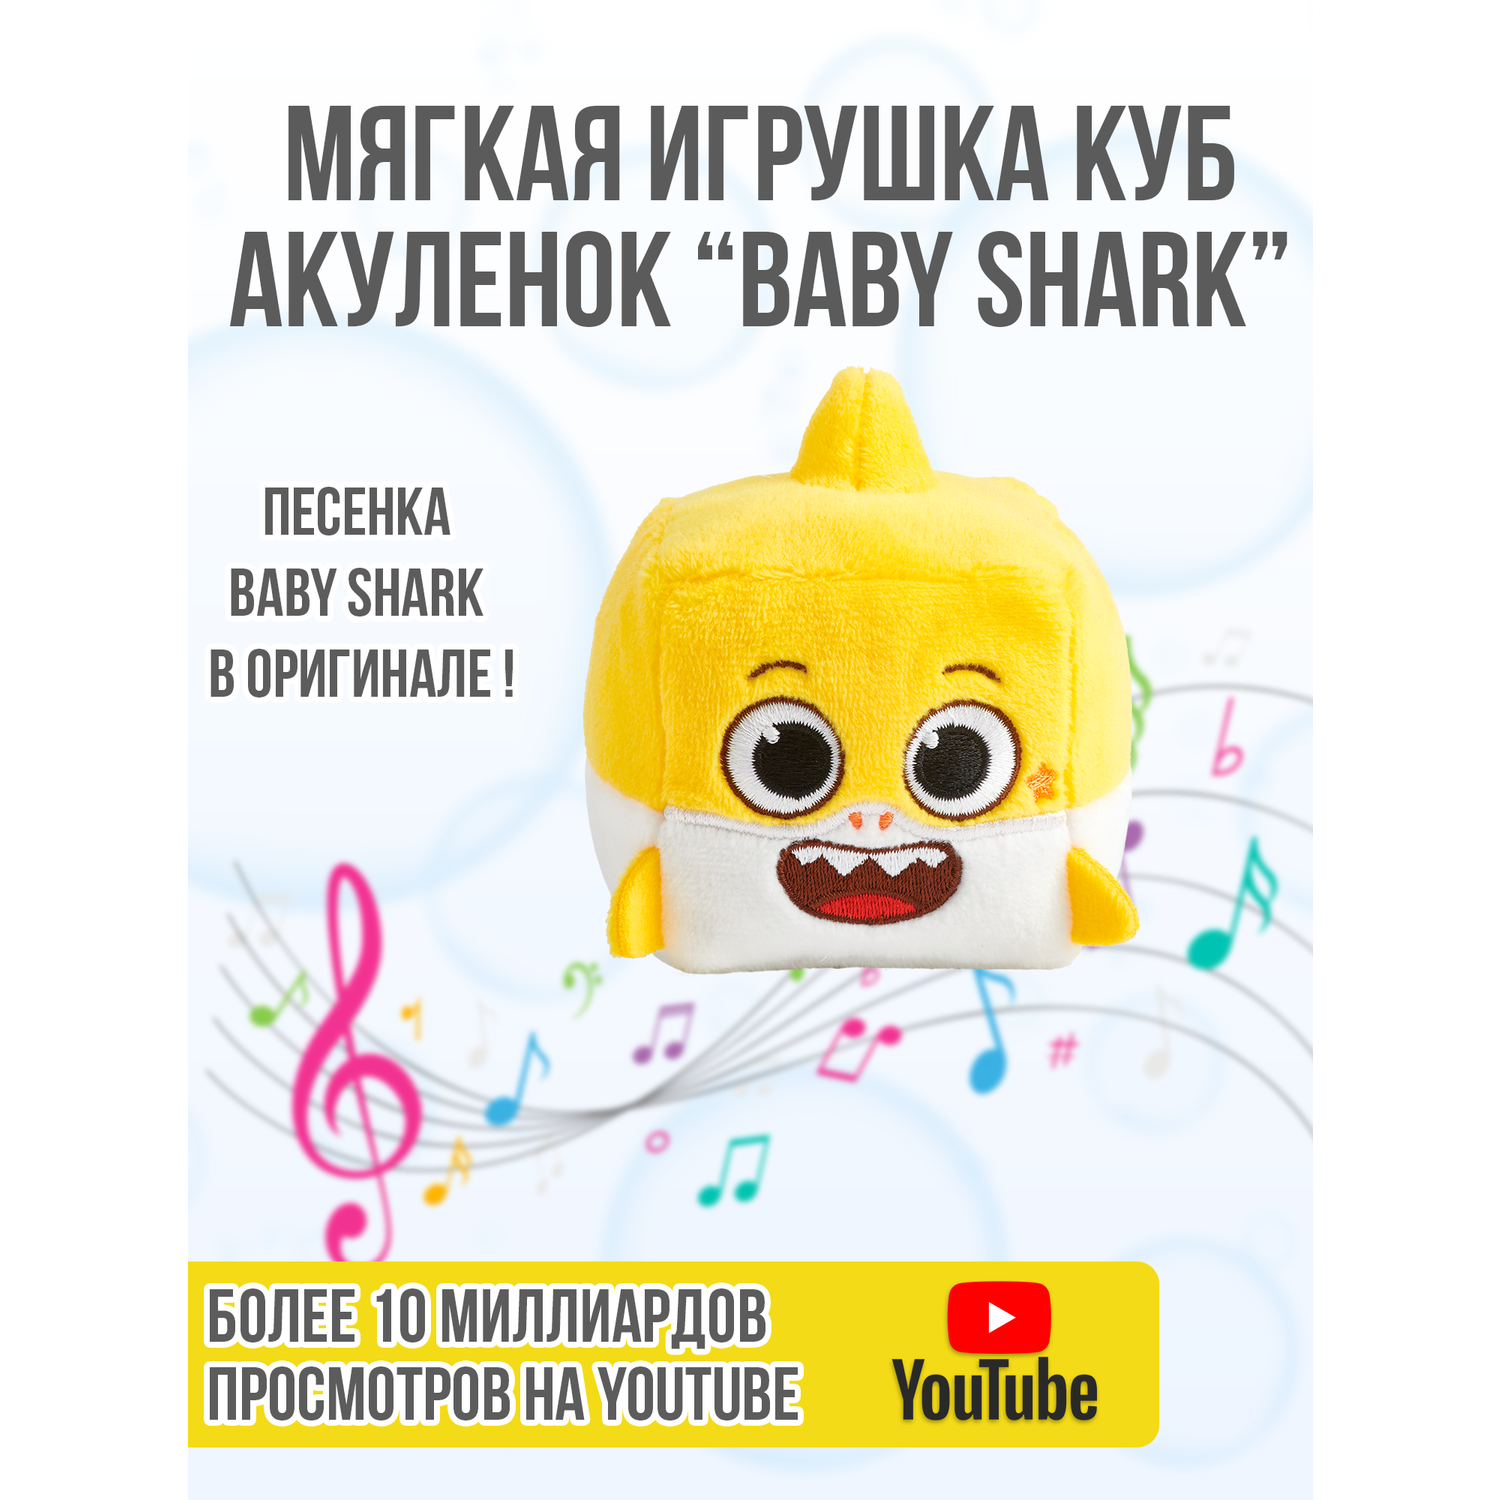 Плюшевый кубик Wow Wee Музыкальный Акуленок Baby Shark 61501 - фото 5